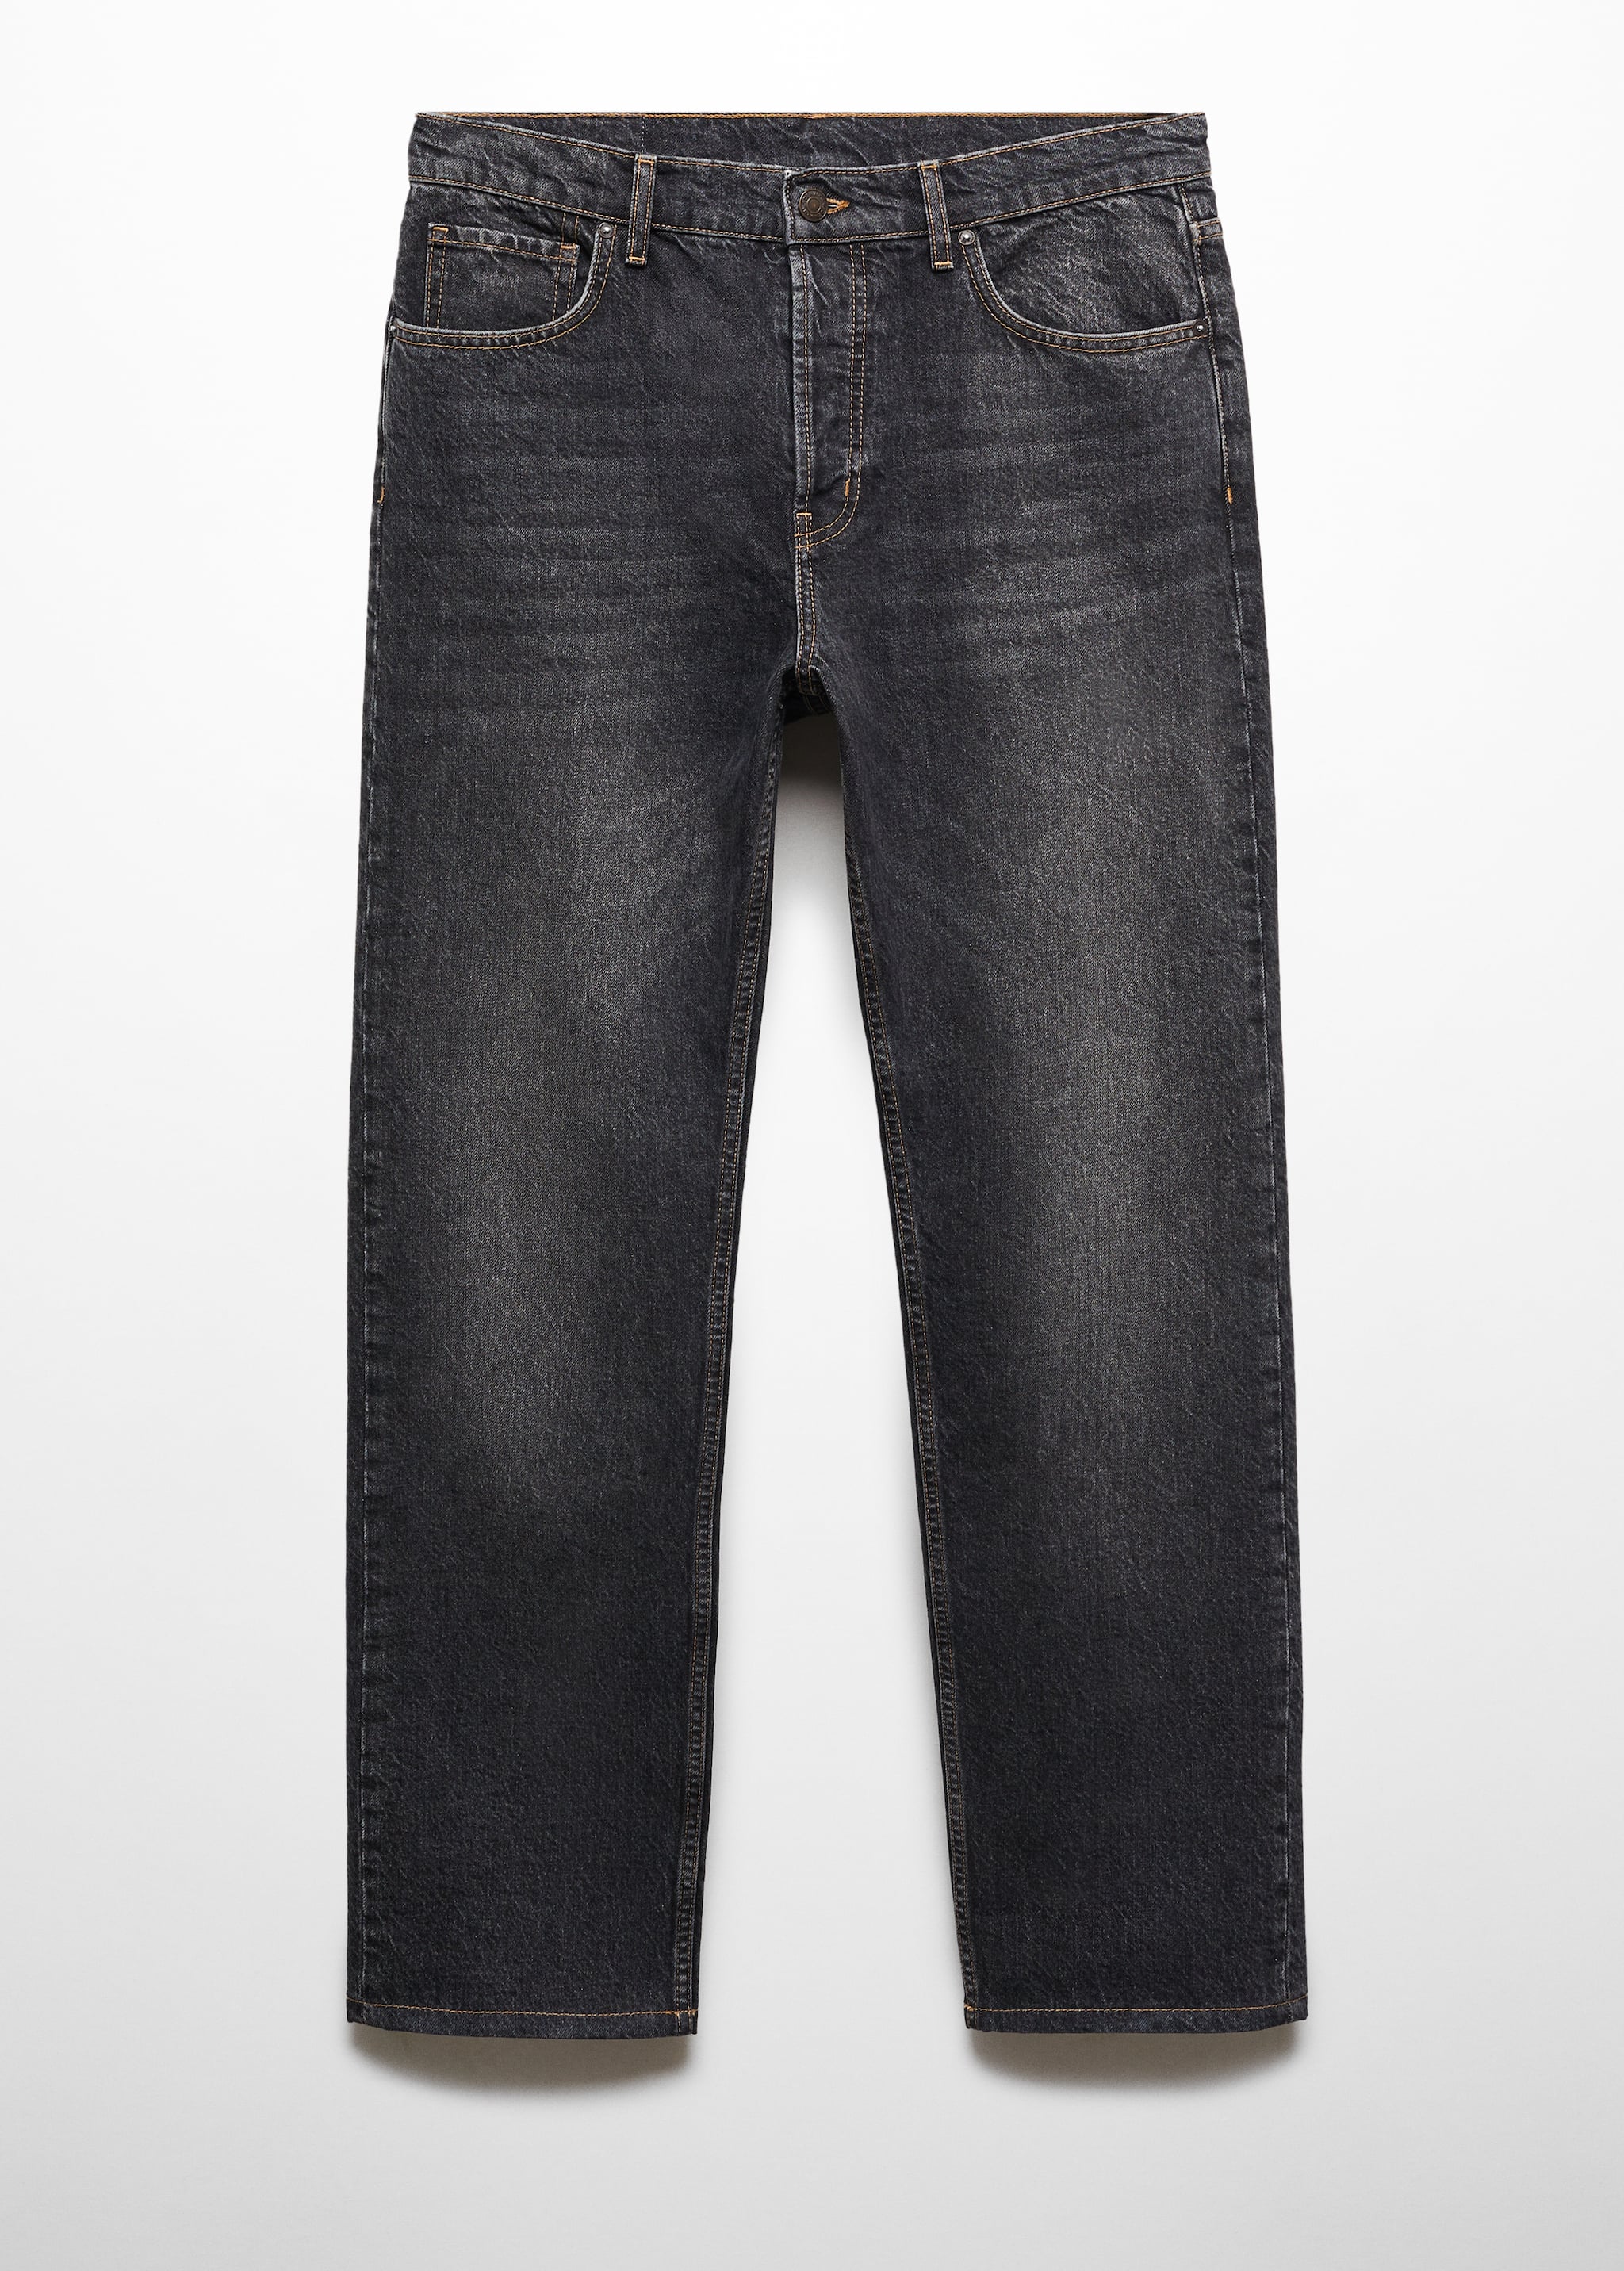 Jeans relaxed fit lavado oscuro - Artículo sin modelo